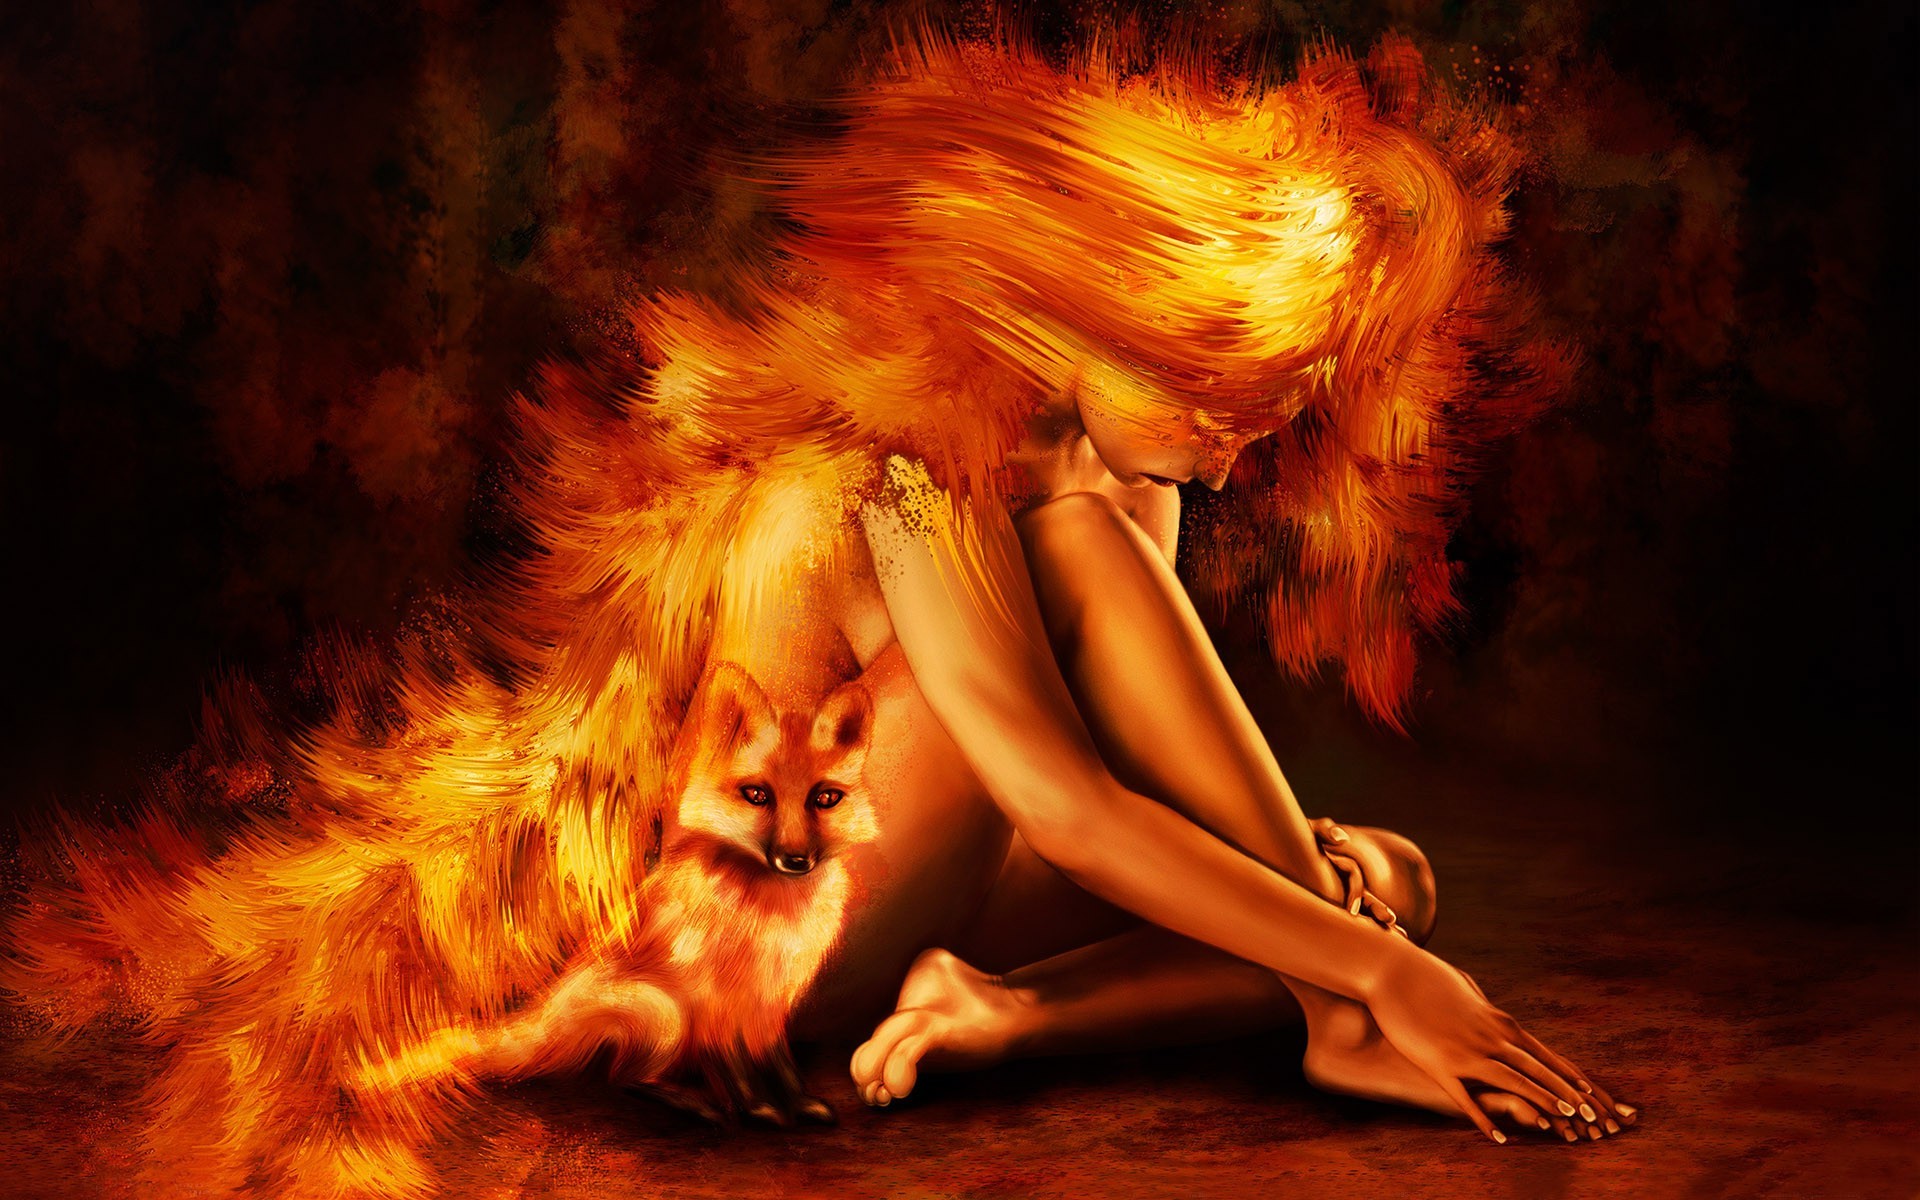 magical animals portrait one woman art fantasy flame magic adult cat hot